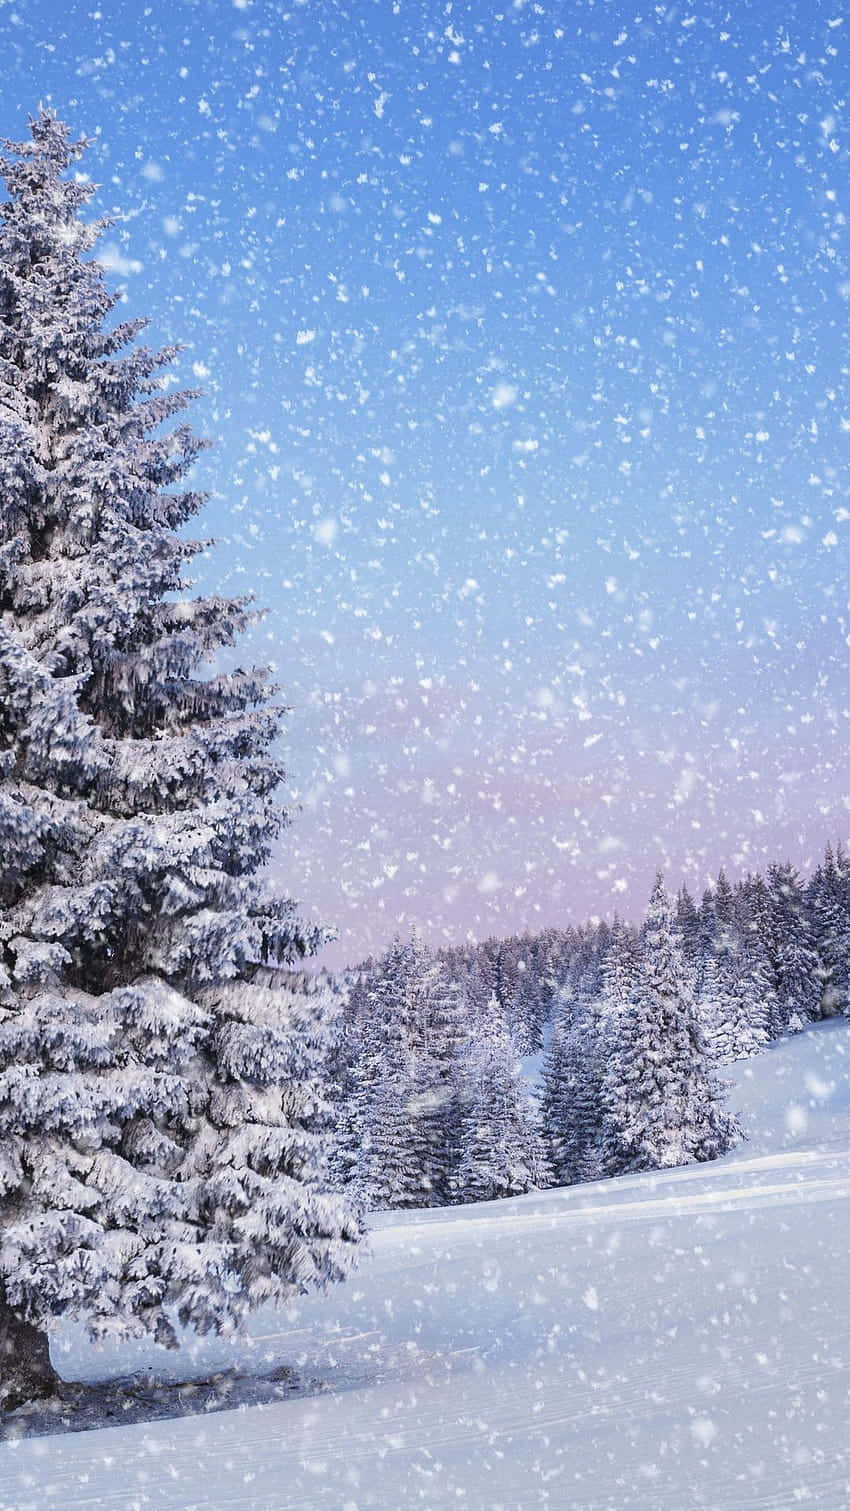 Get the festive feeling - enjoy a magical Christmas Winter Wonderland Wallpaper